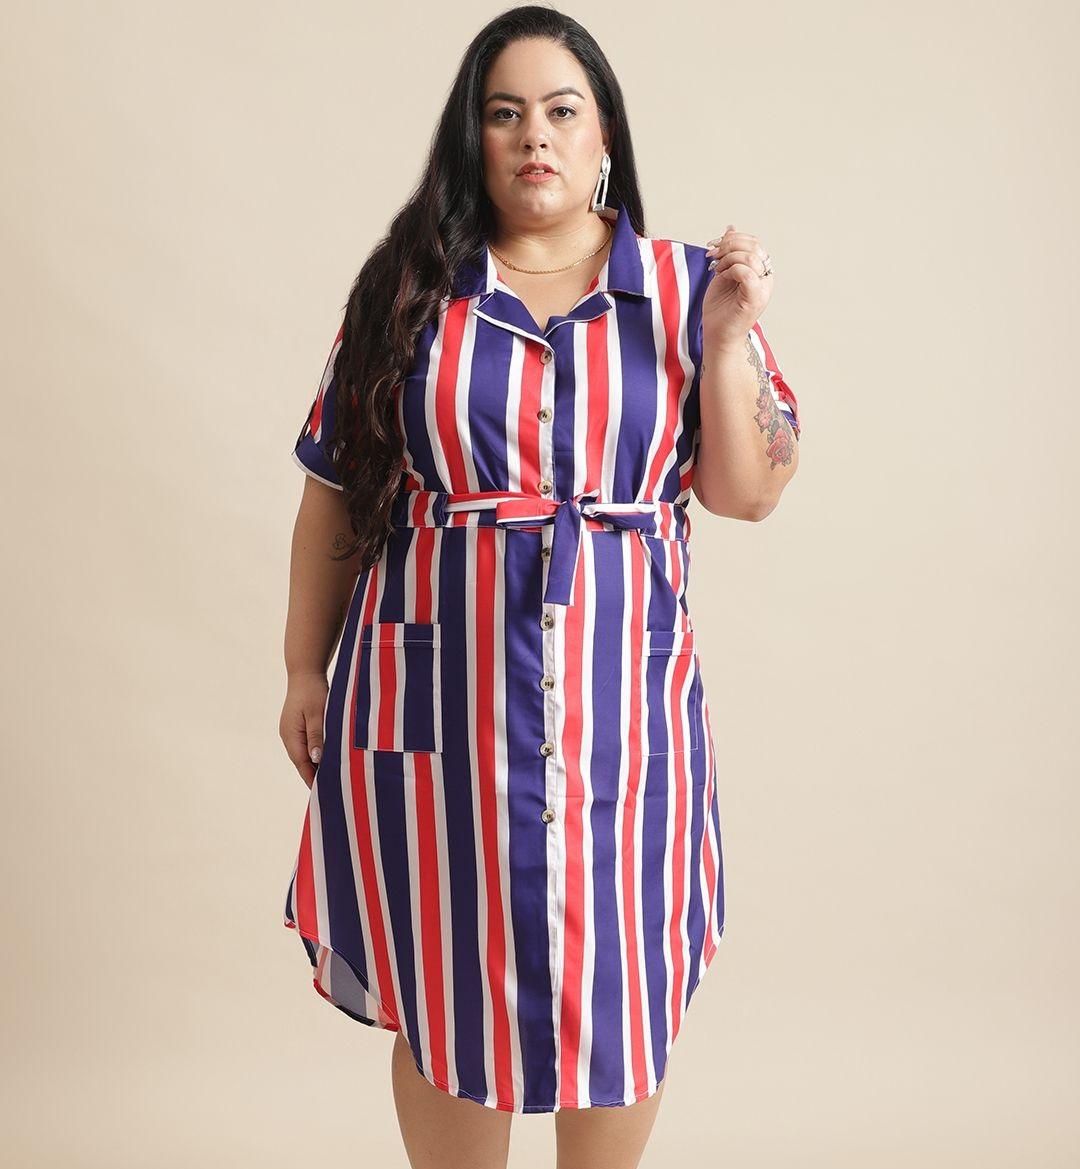 Flambeur Plus Size Stripe Shirt Style Midi Dress for Women